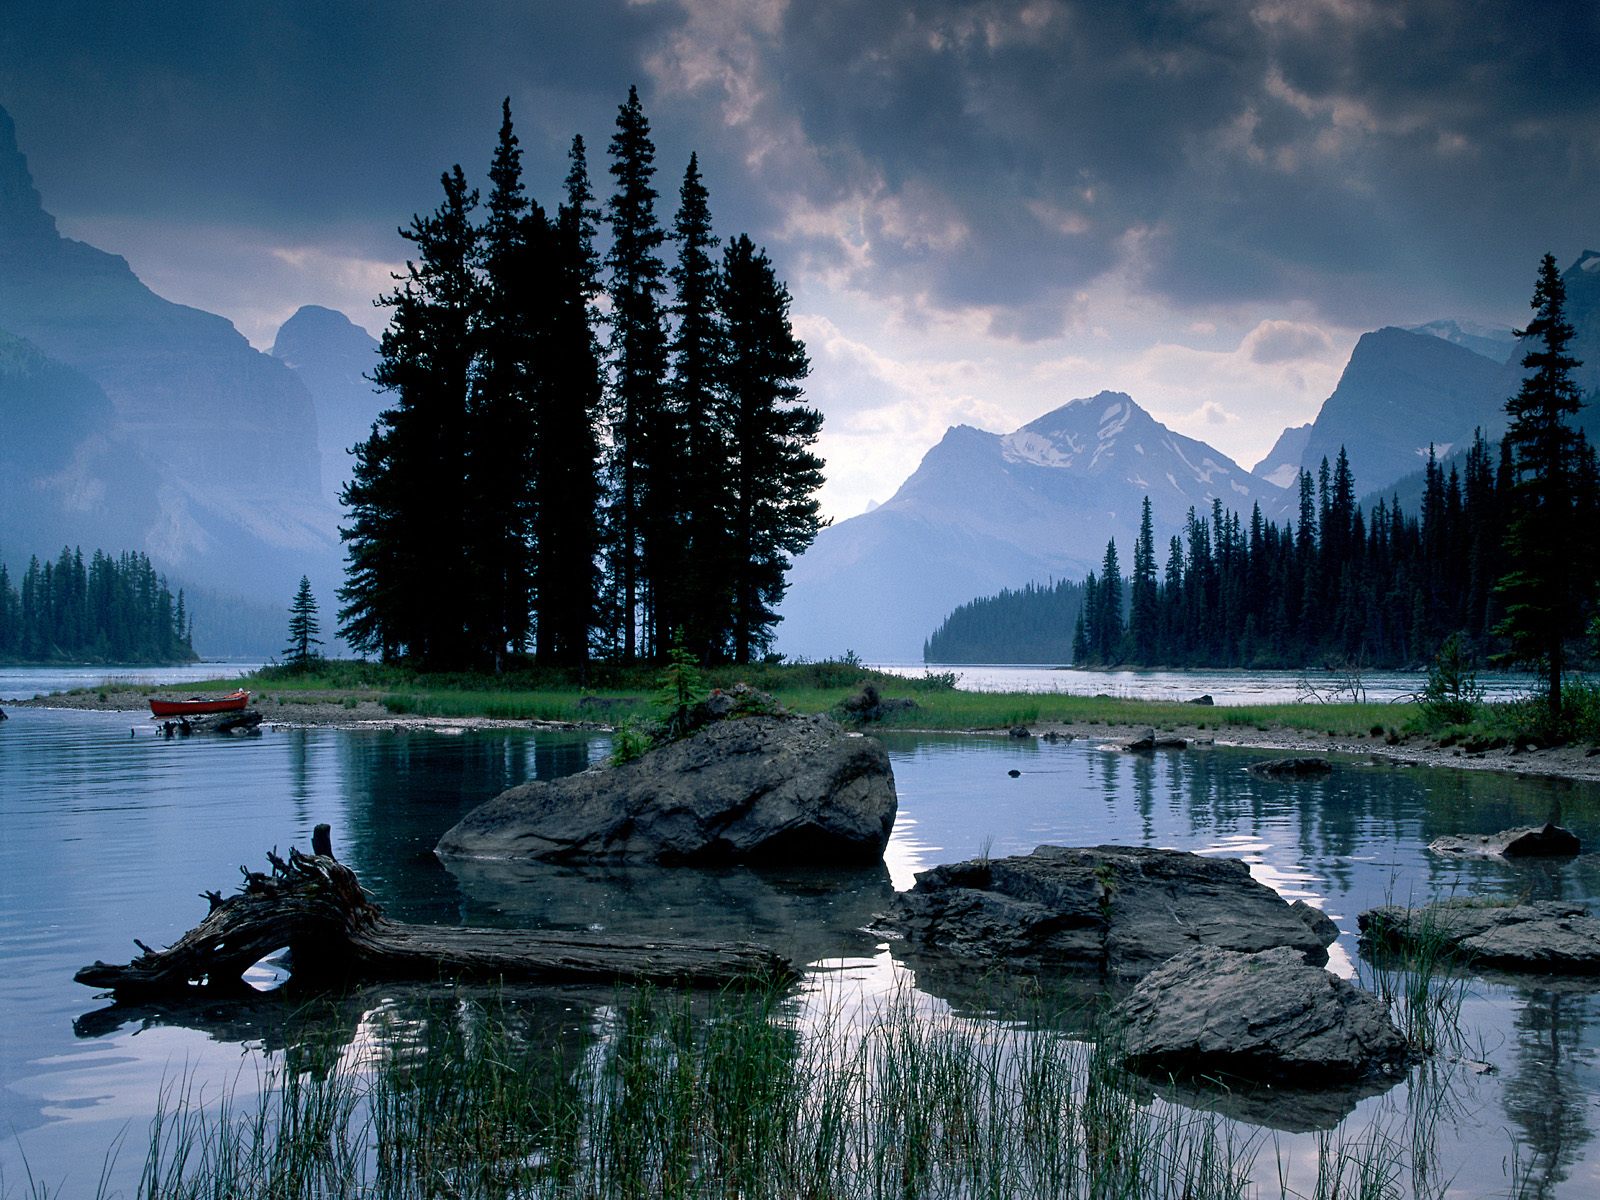 520780 descargar imagen lagos, árbol, montaña, lago, tierra/naturaleza: fondos de pantalla y protectores de pantalla gratis